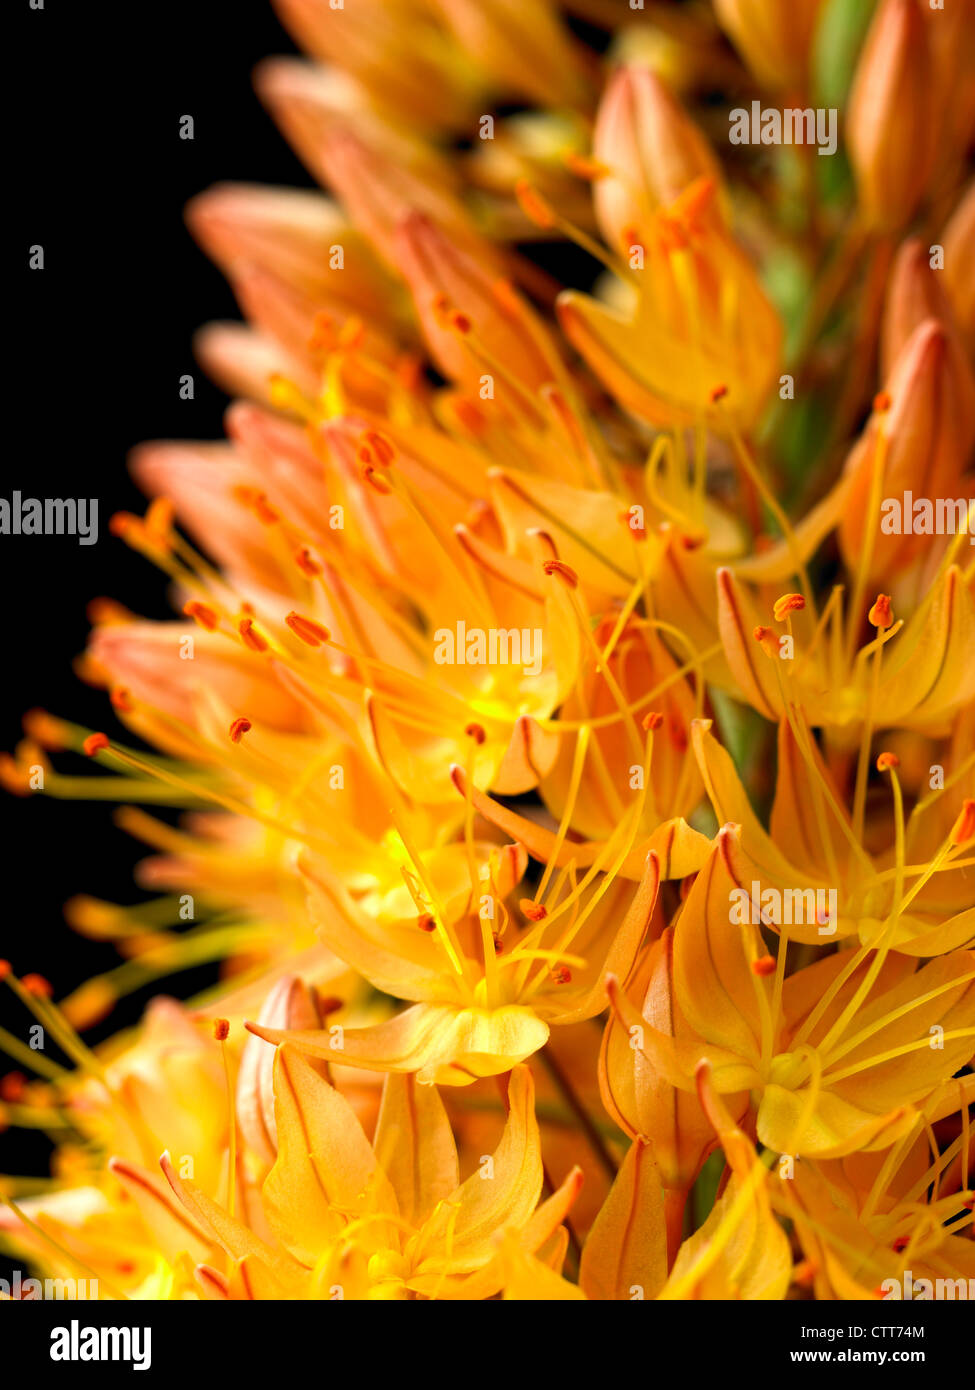 Eremurus x isabellinus 'Cleopatra', Foxtail lily, Orange, Black. Stock Photo